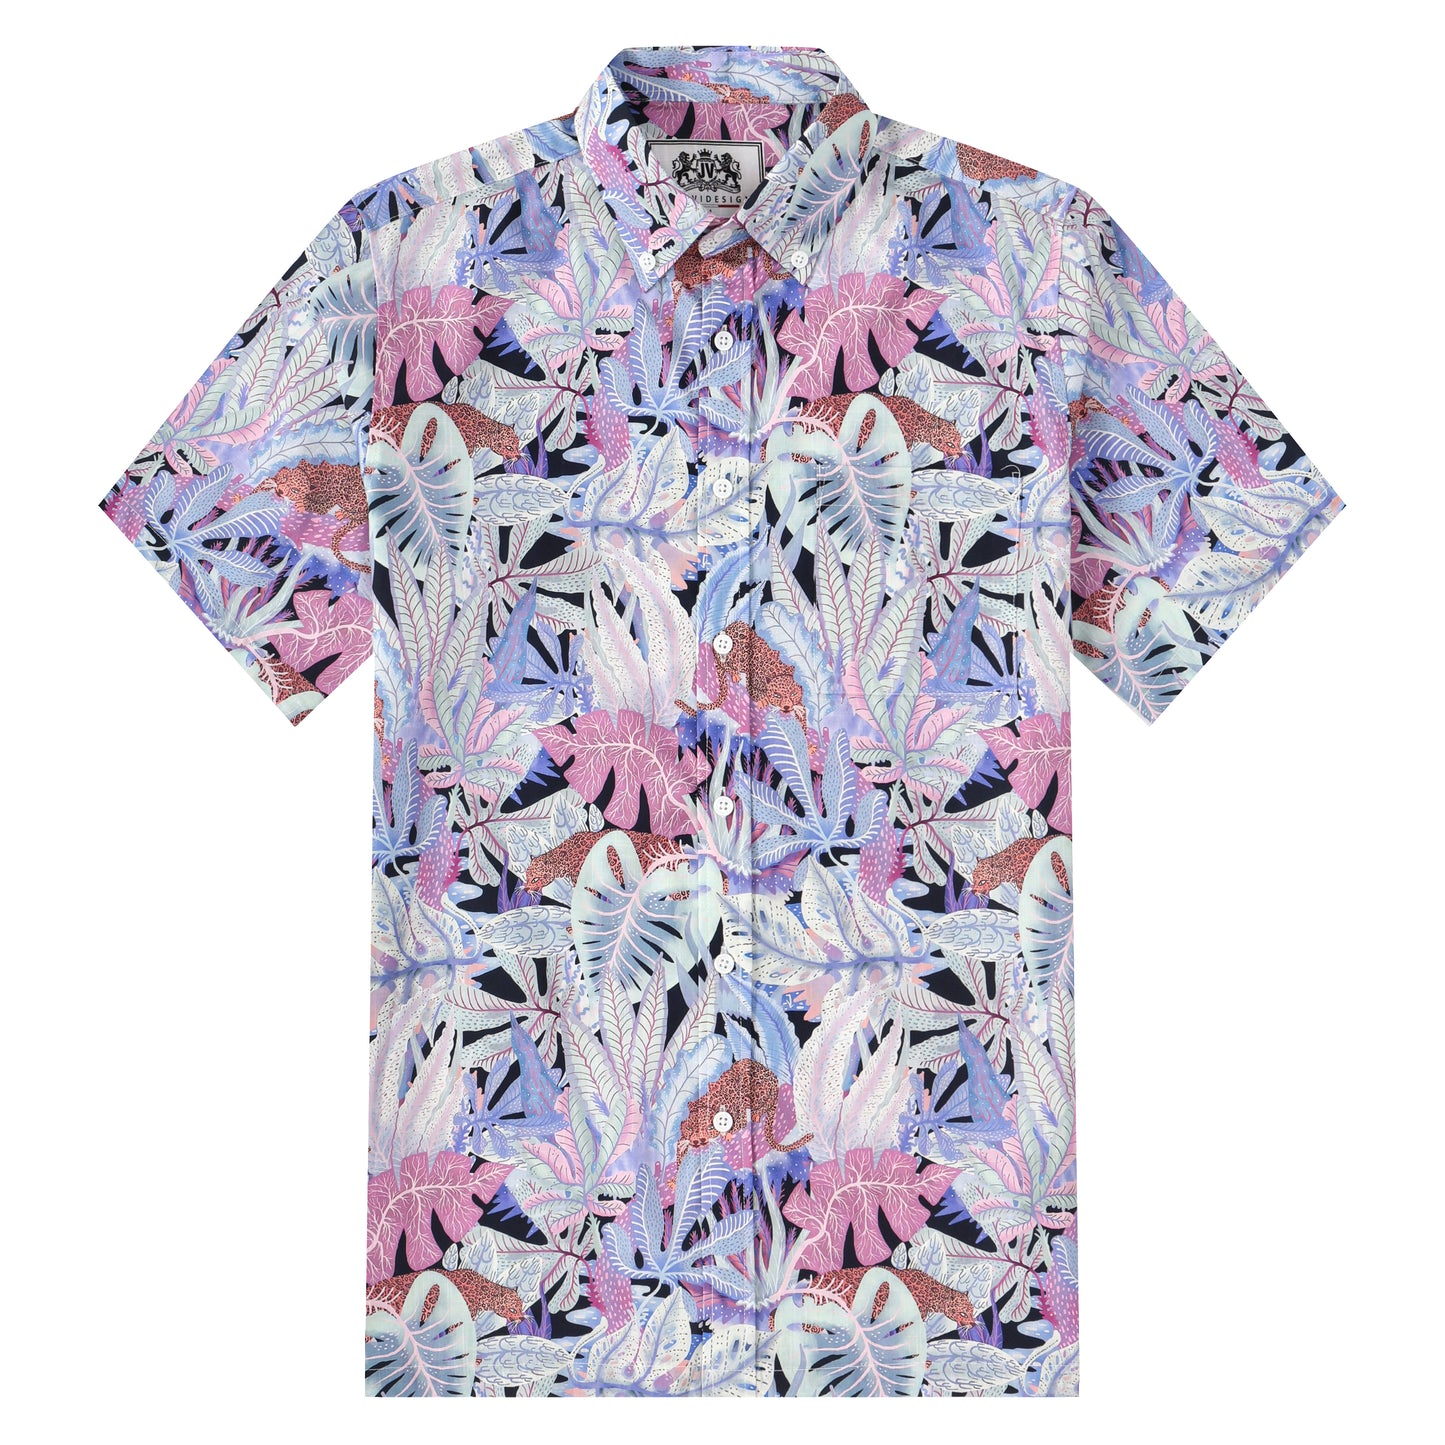 Tropical Aloha Pattern Button Short Sleeve Shirt